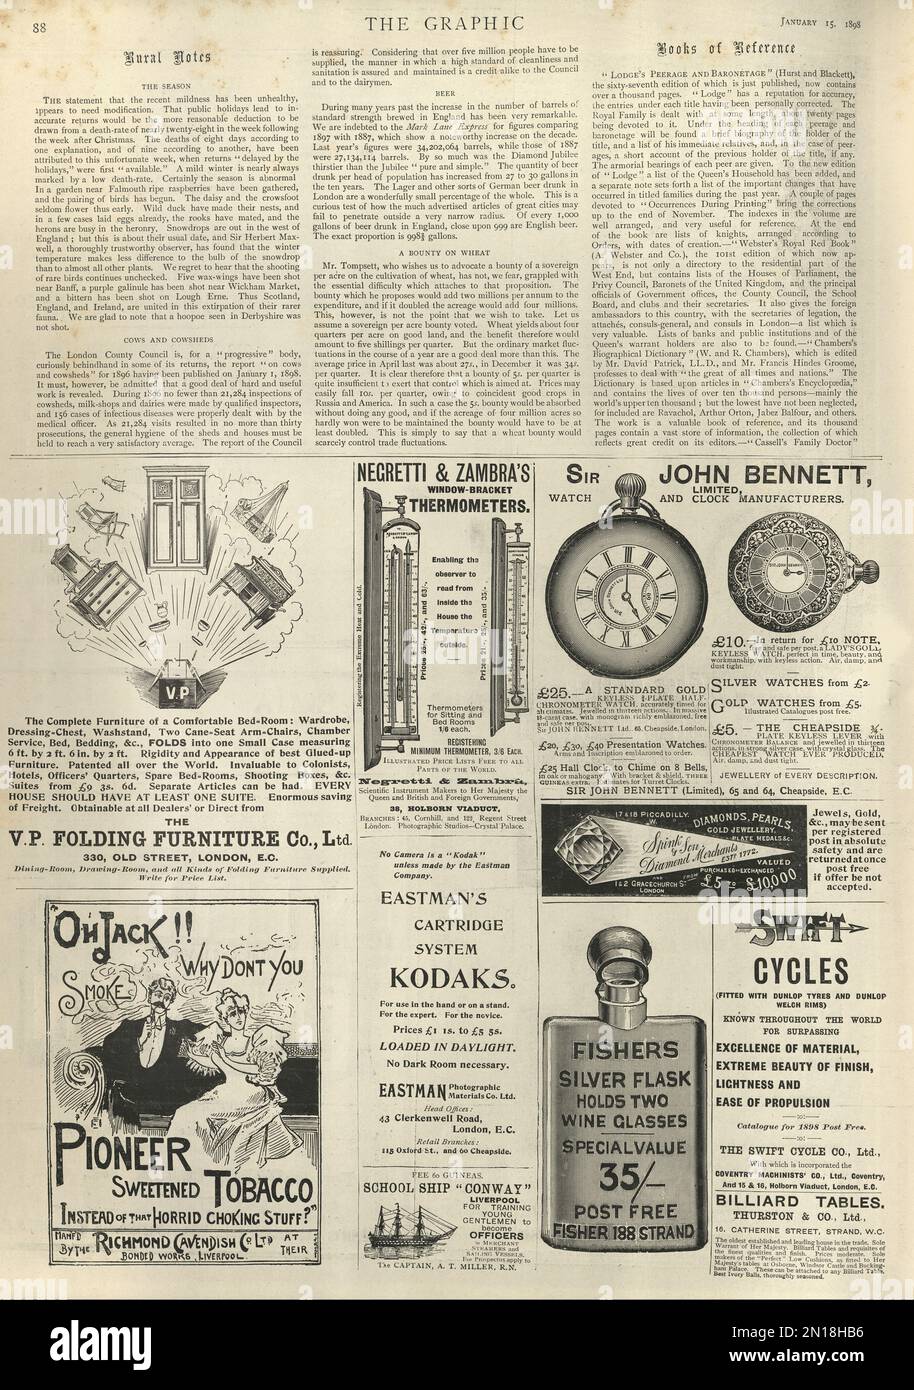 Victorian newpsaper adverts, 1890s, Pioneer sweetened tobacco, kodaks, folding furniture Stock Photo